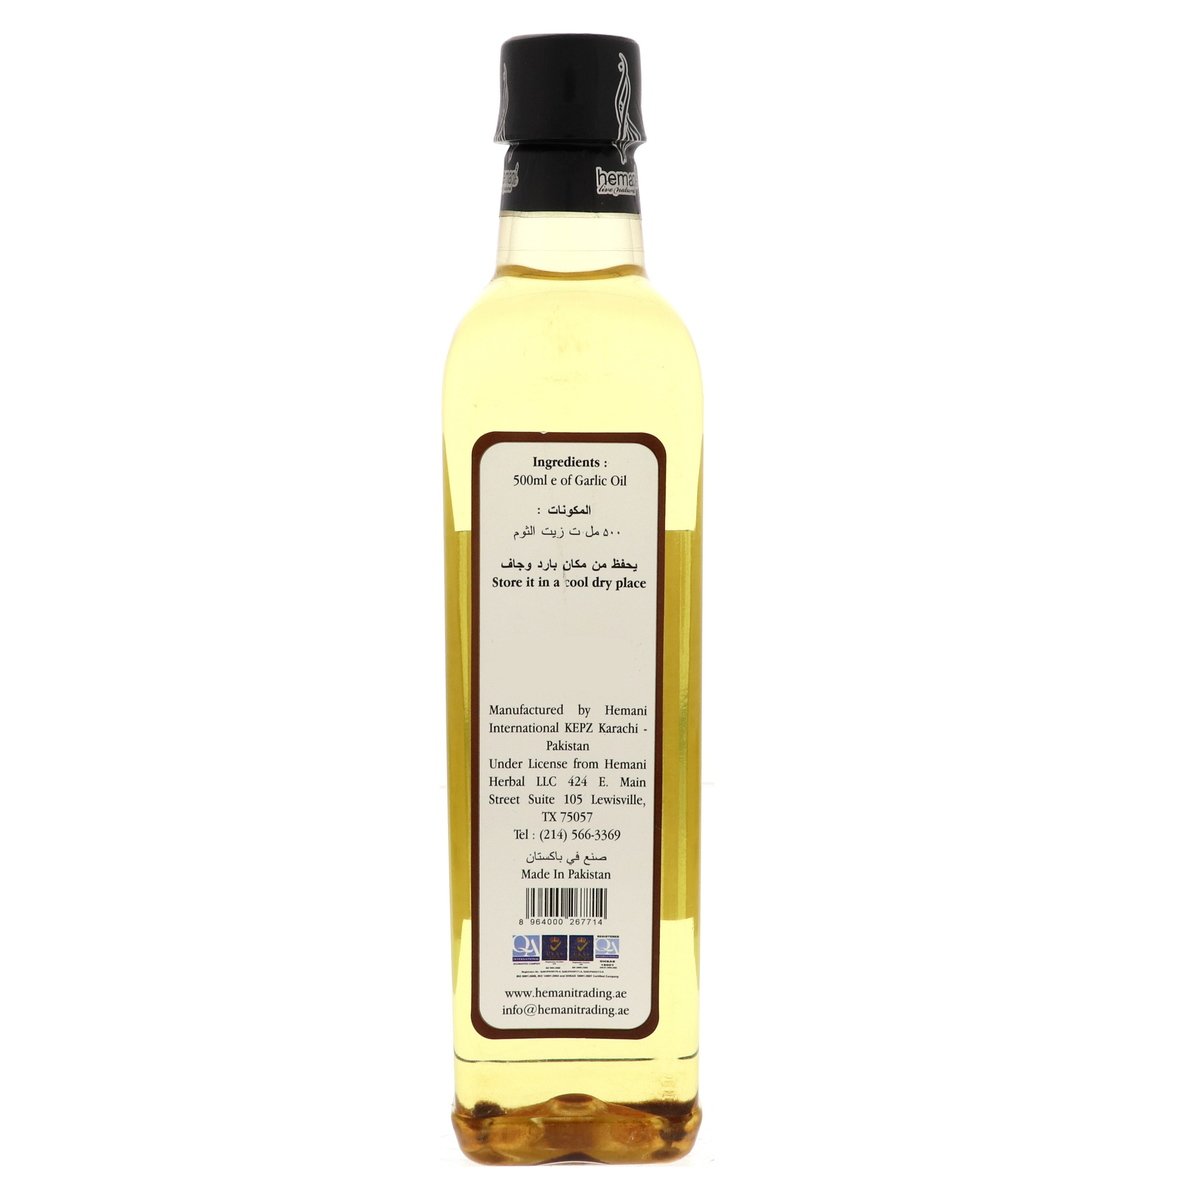 Hemani Garlic Oil 500 ml